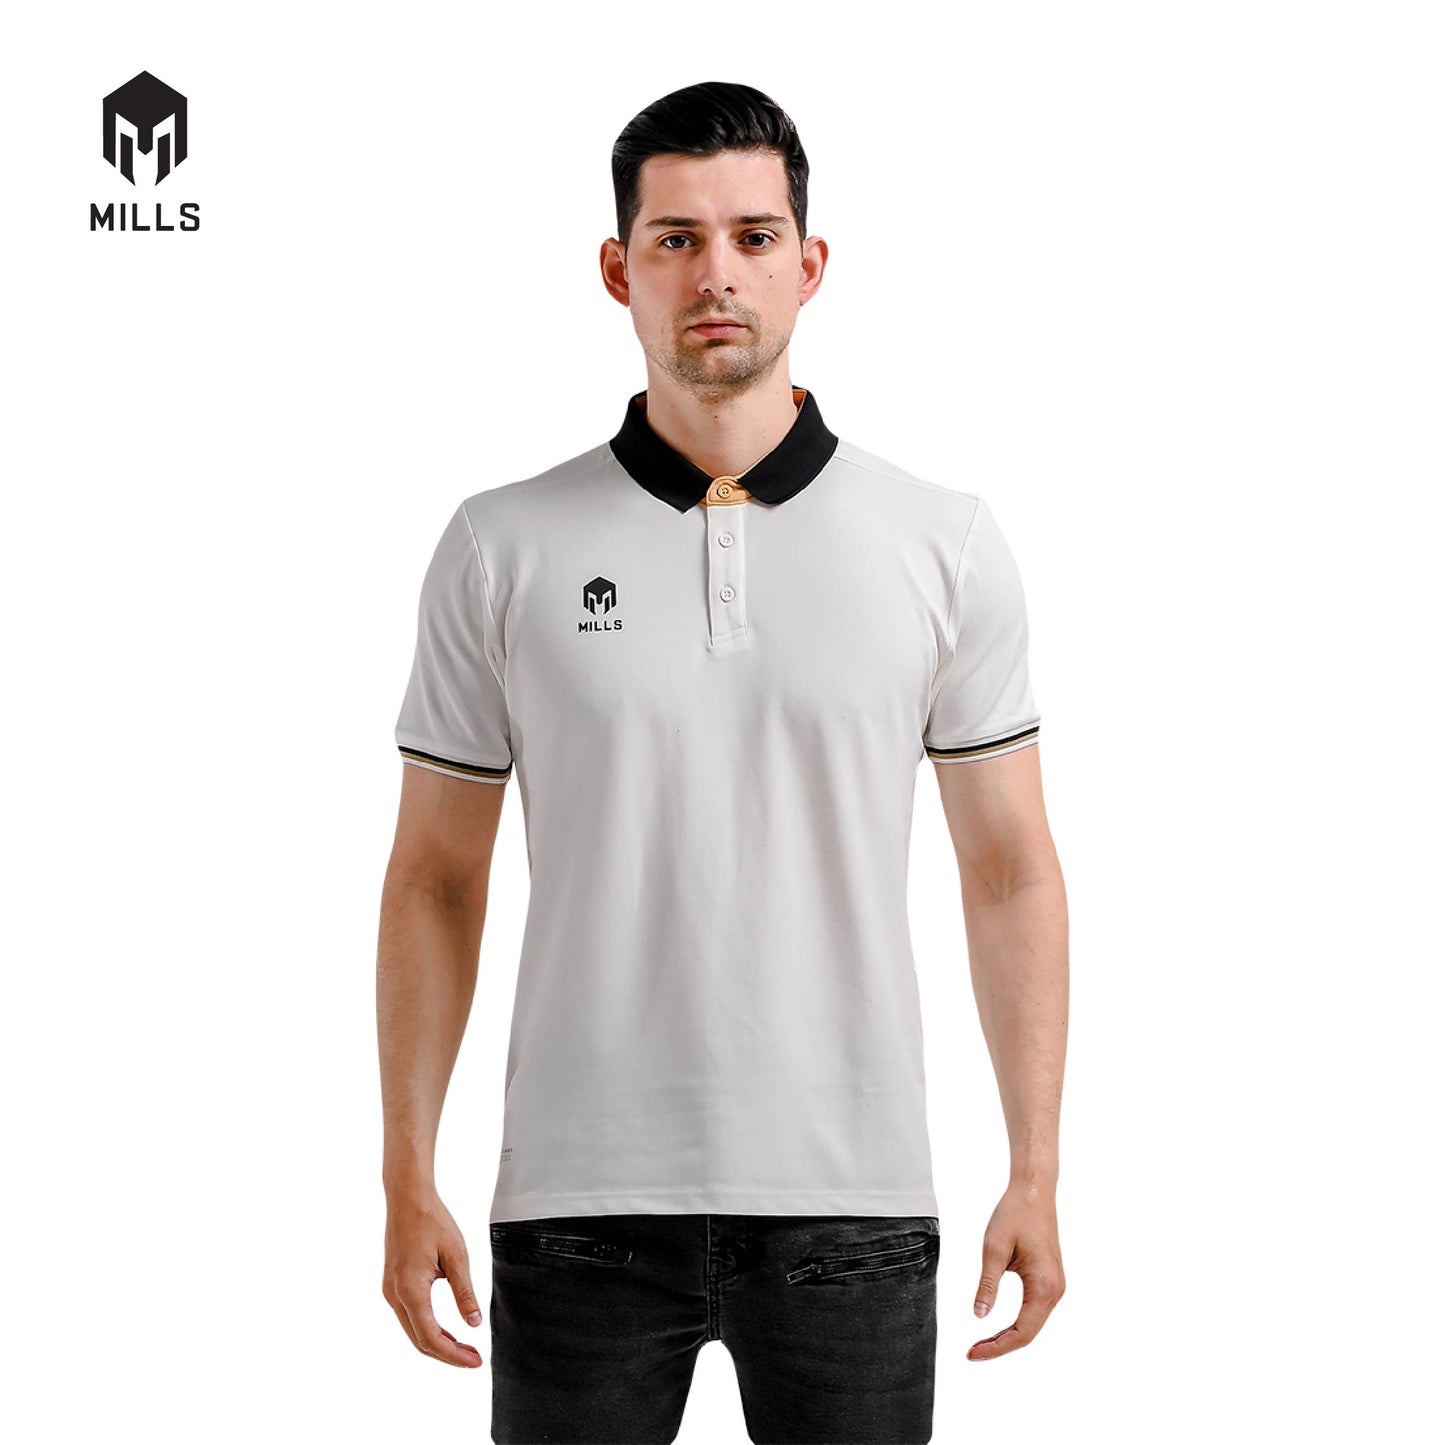 Mills Polo Shirt Style Pluto 17052